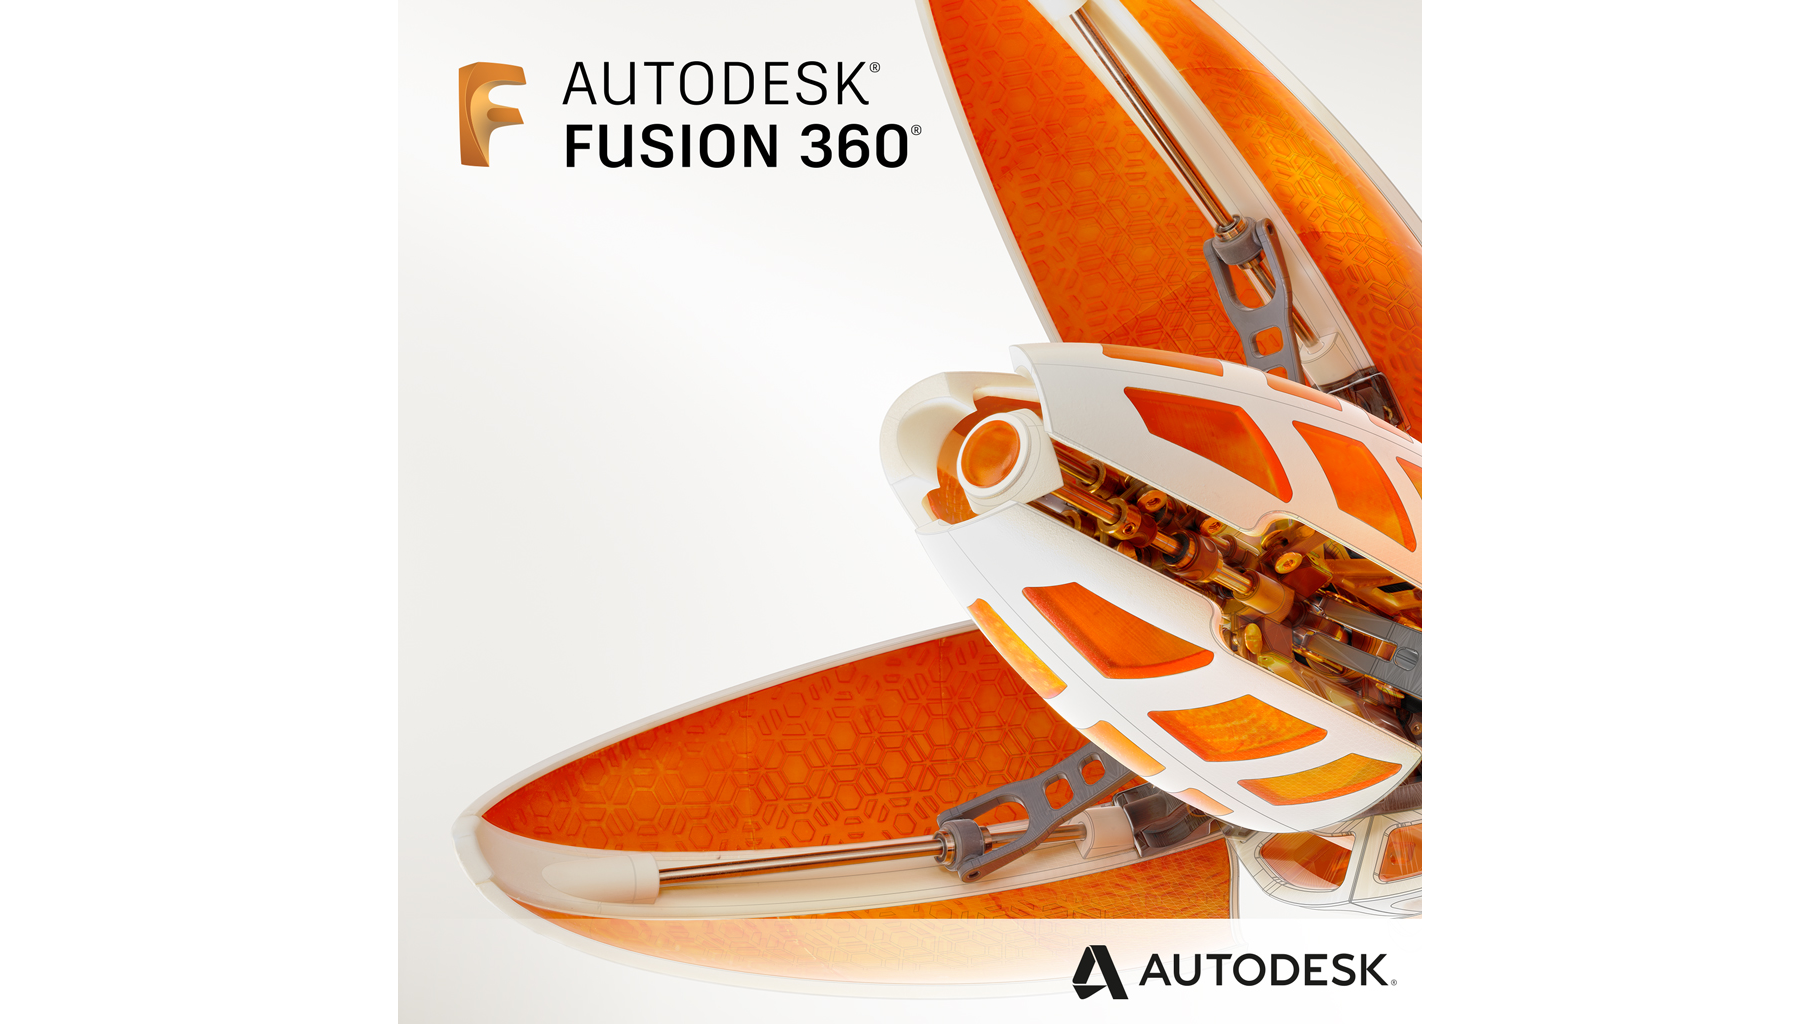 fusion 360 subscription price